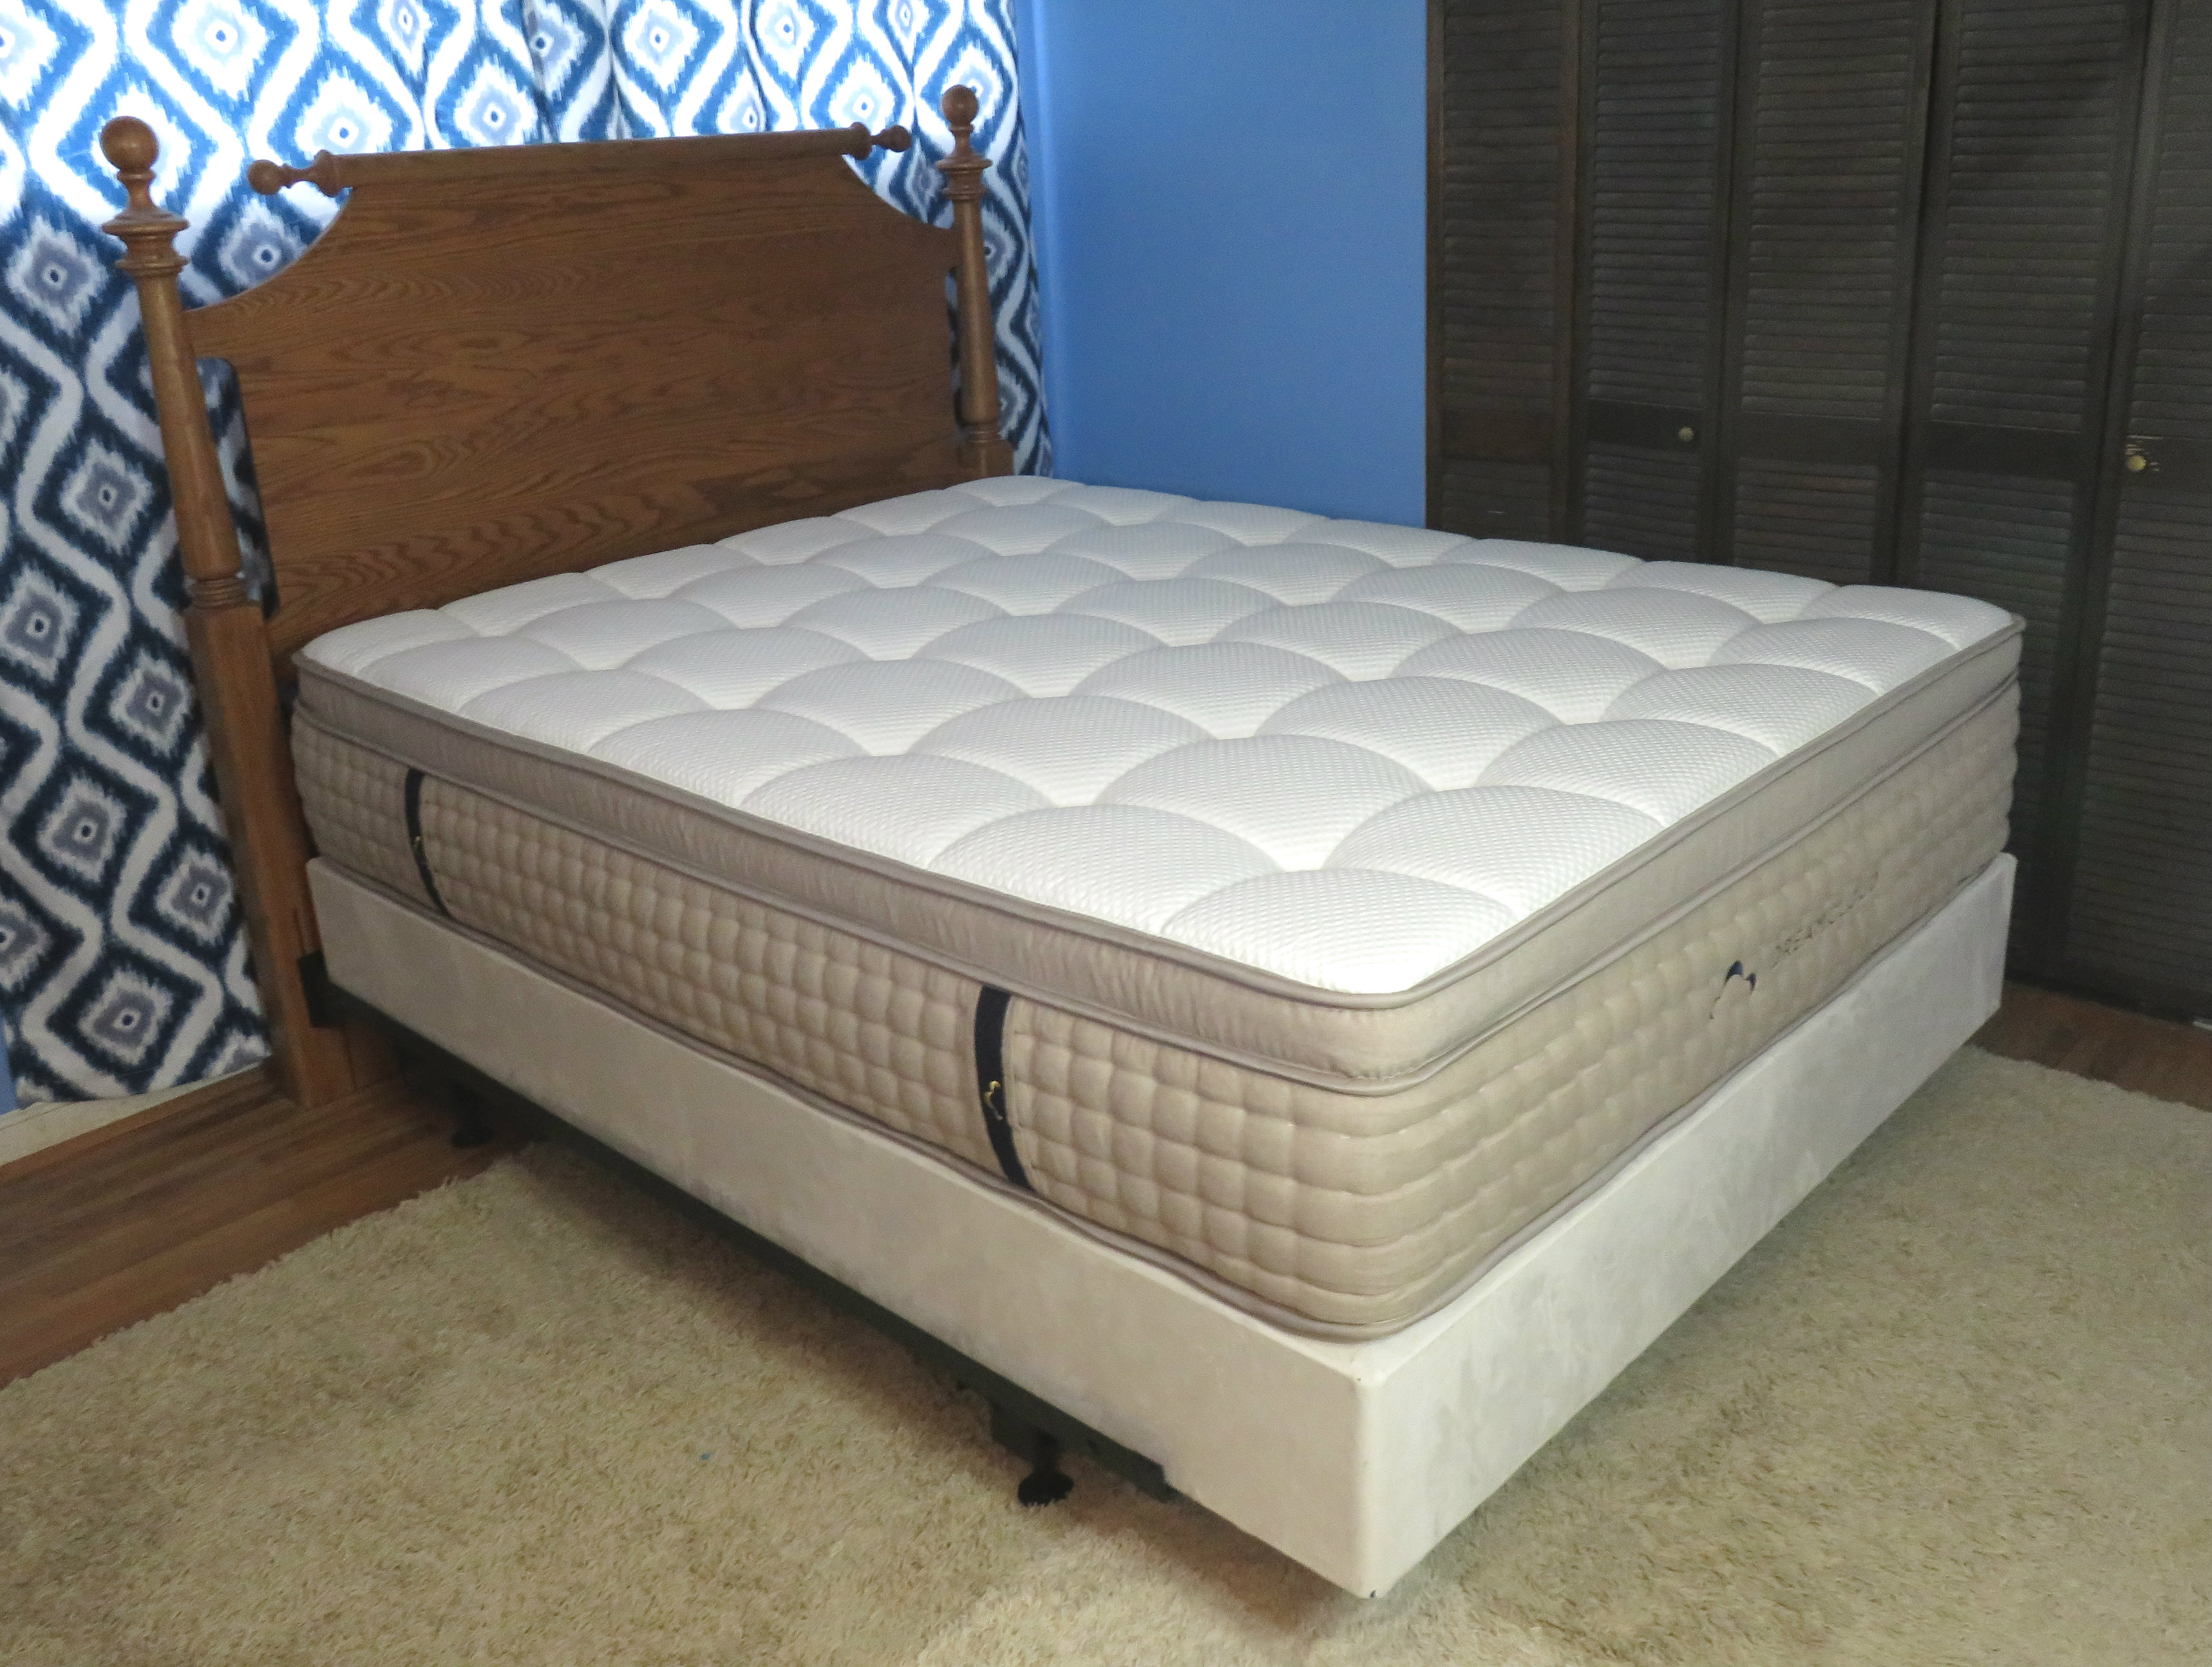 dreamcloud mattress veteran's day sale